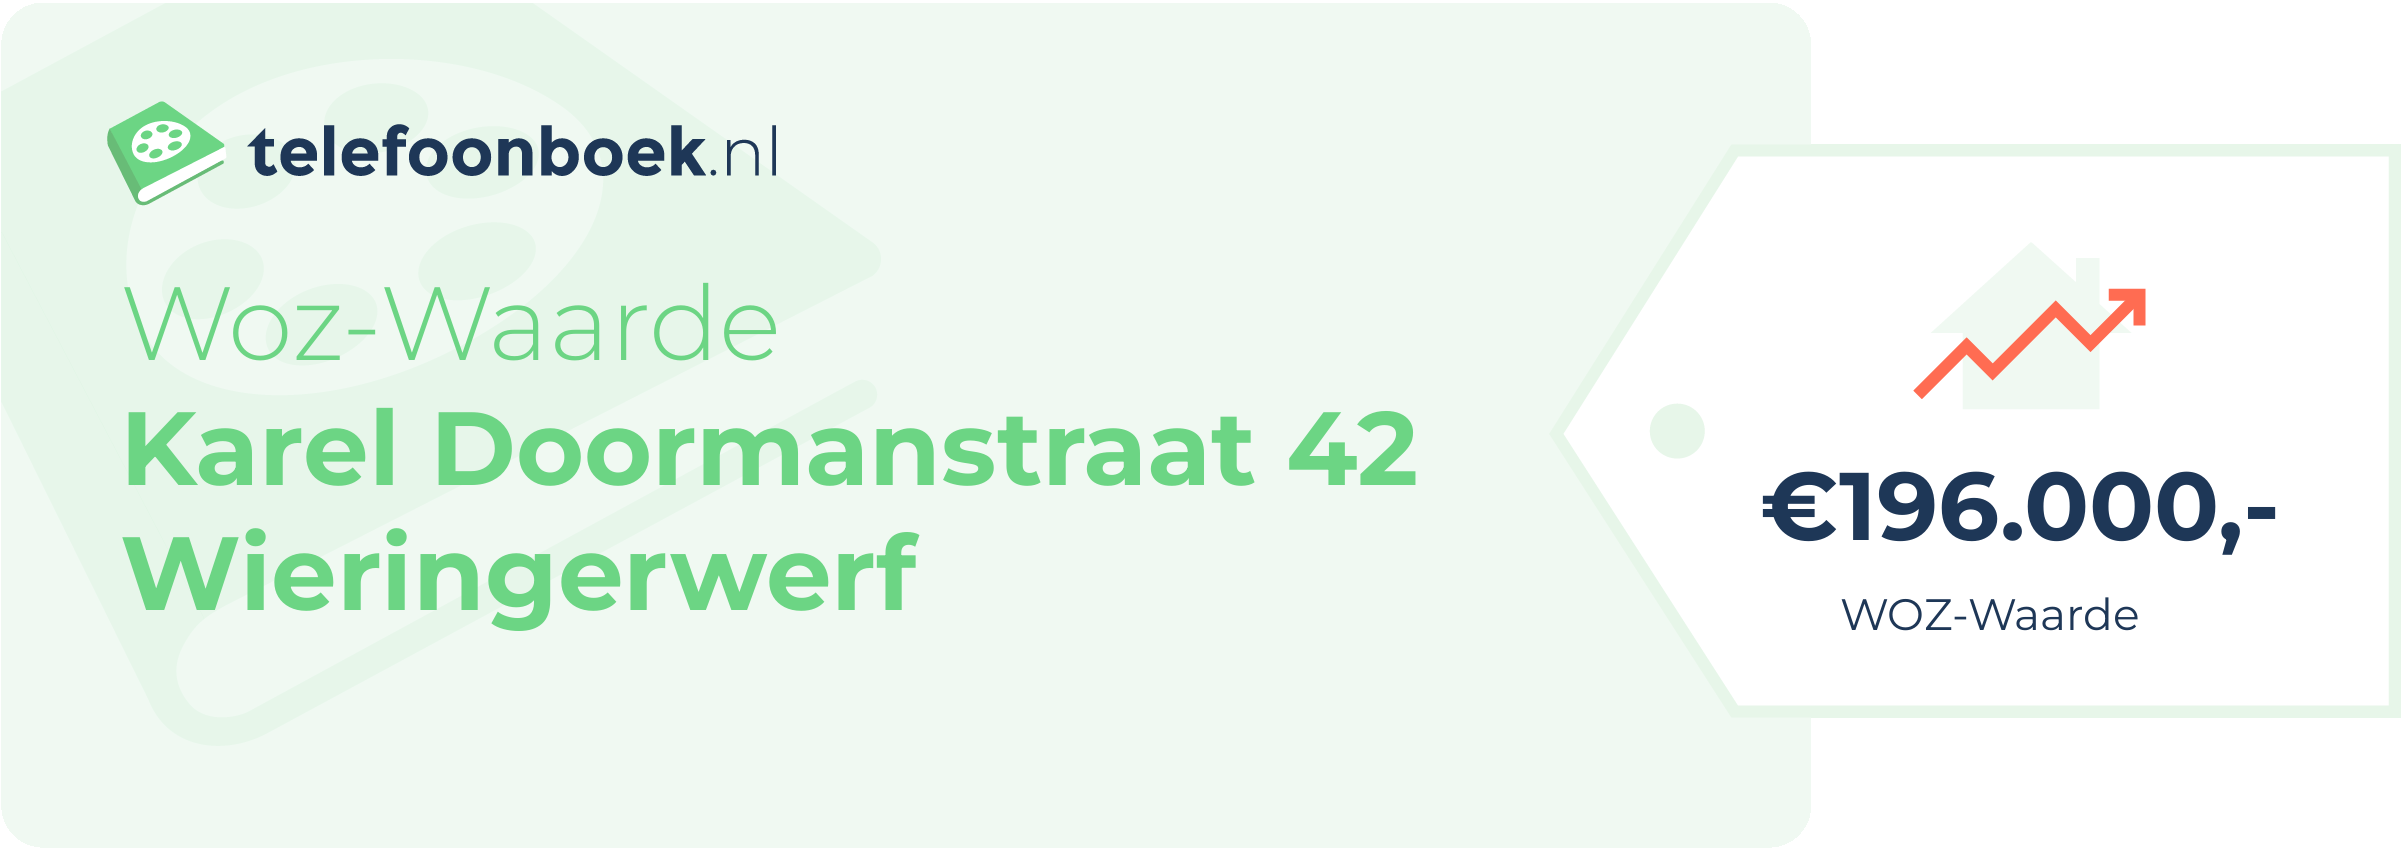 WOZ-waarde Karel Doormanstraat 42 Wieringerwerf